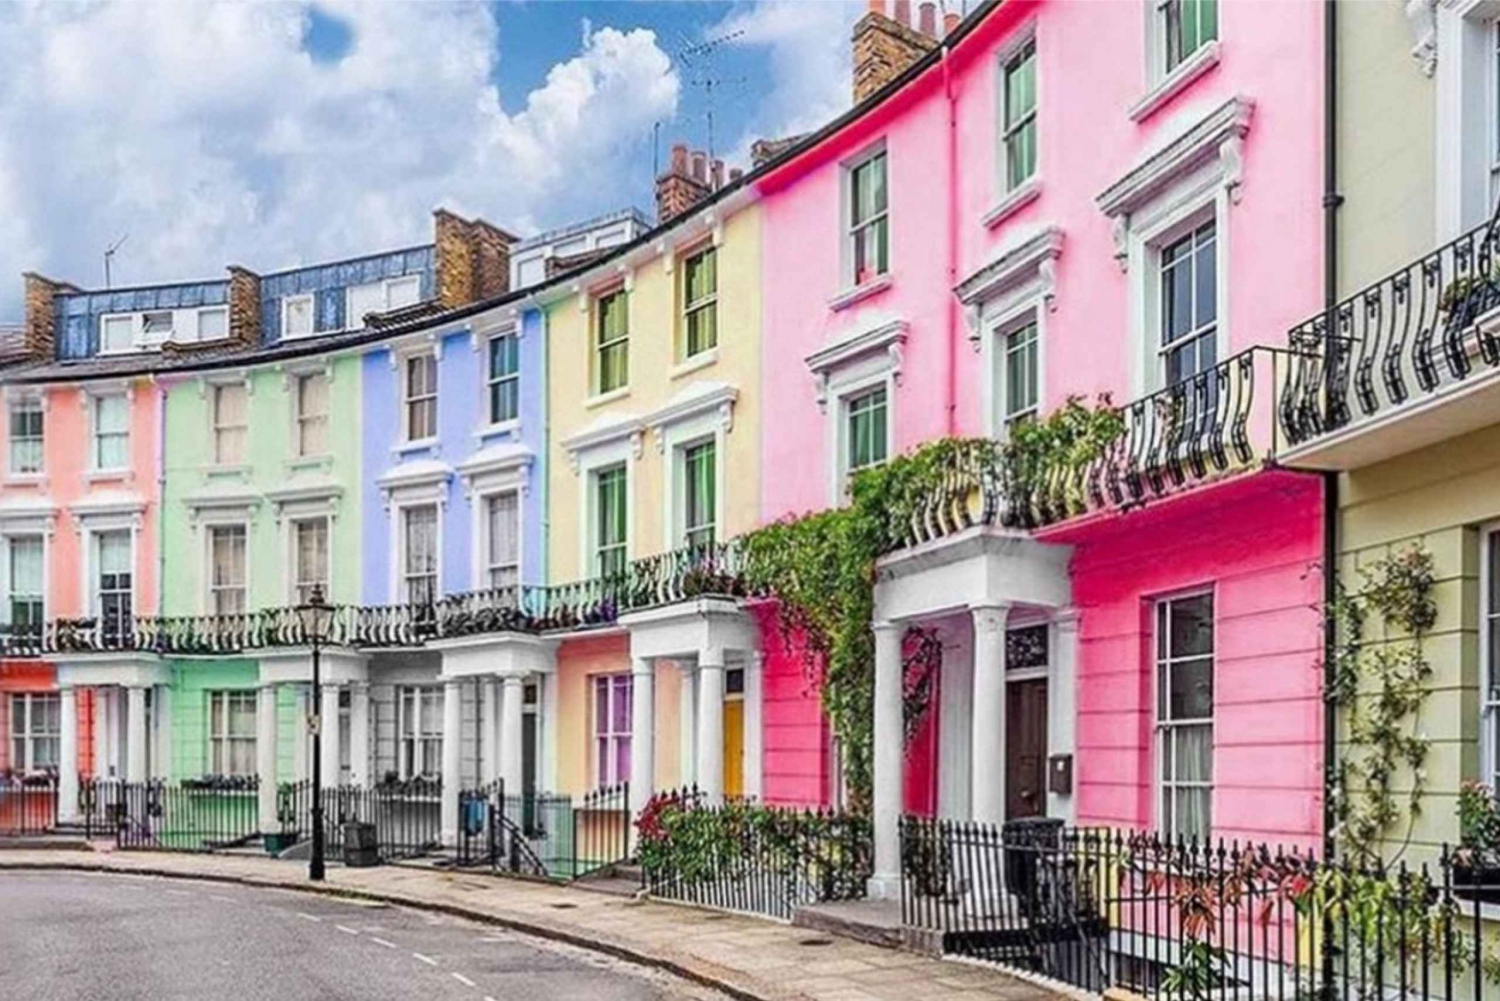 Värikäs Notting Hillin valokuvauskierros